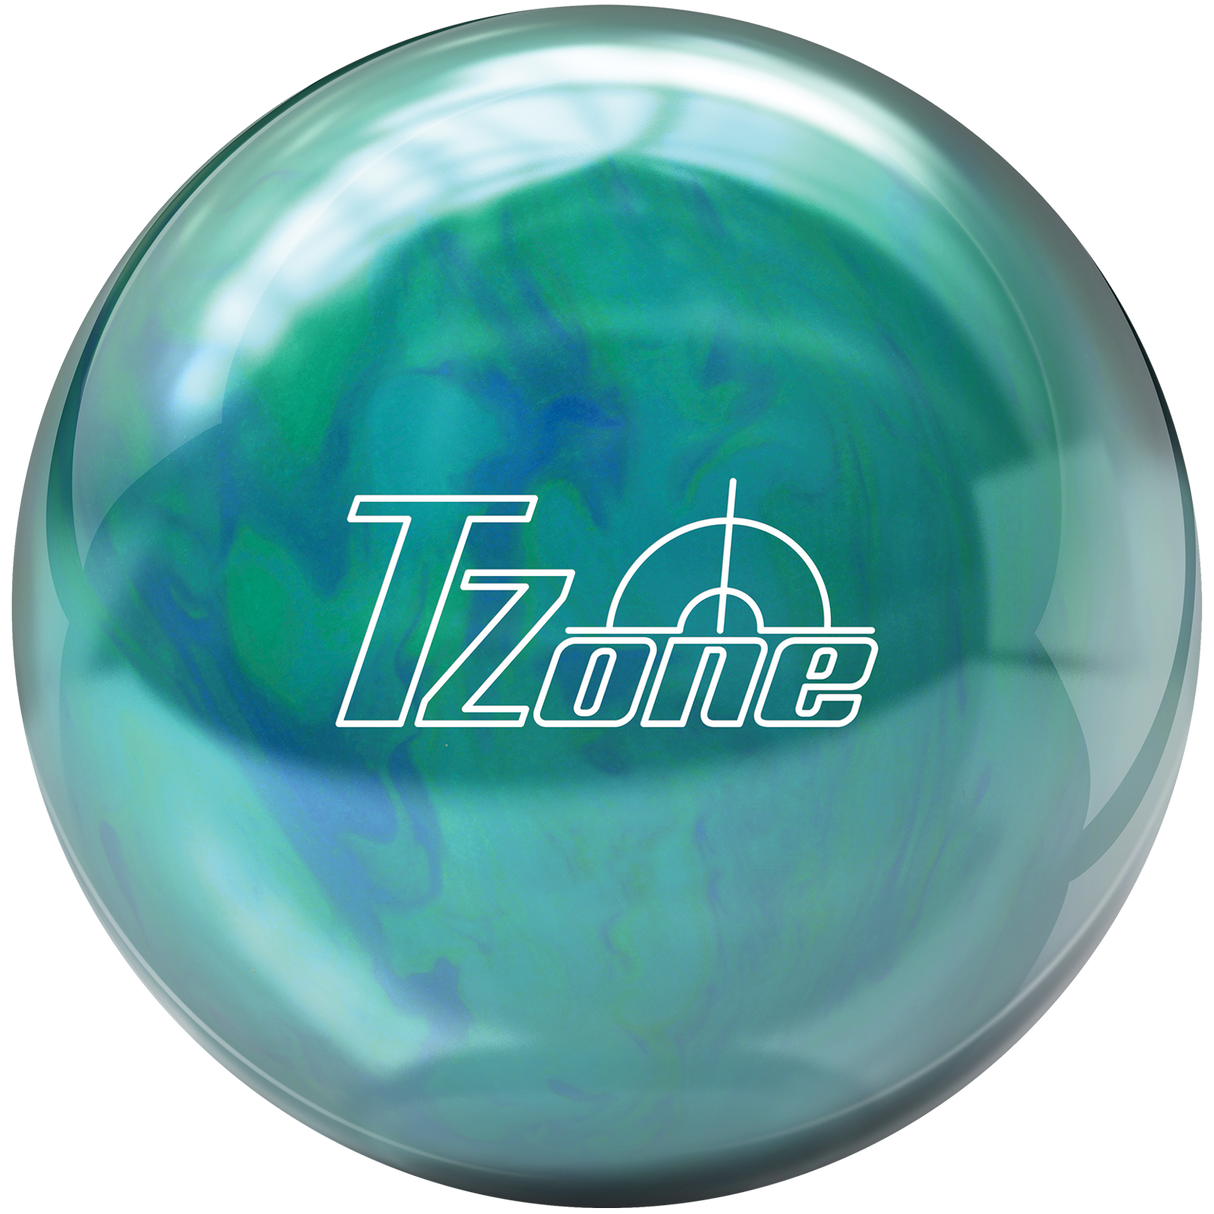 brunswick-tzone-caribbean-blue bowling ball insidebowling.com